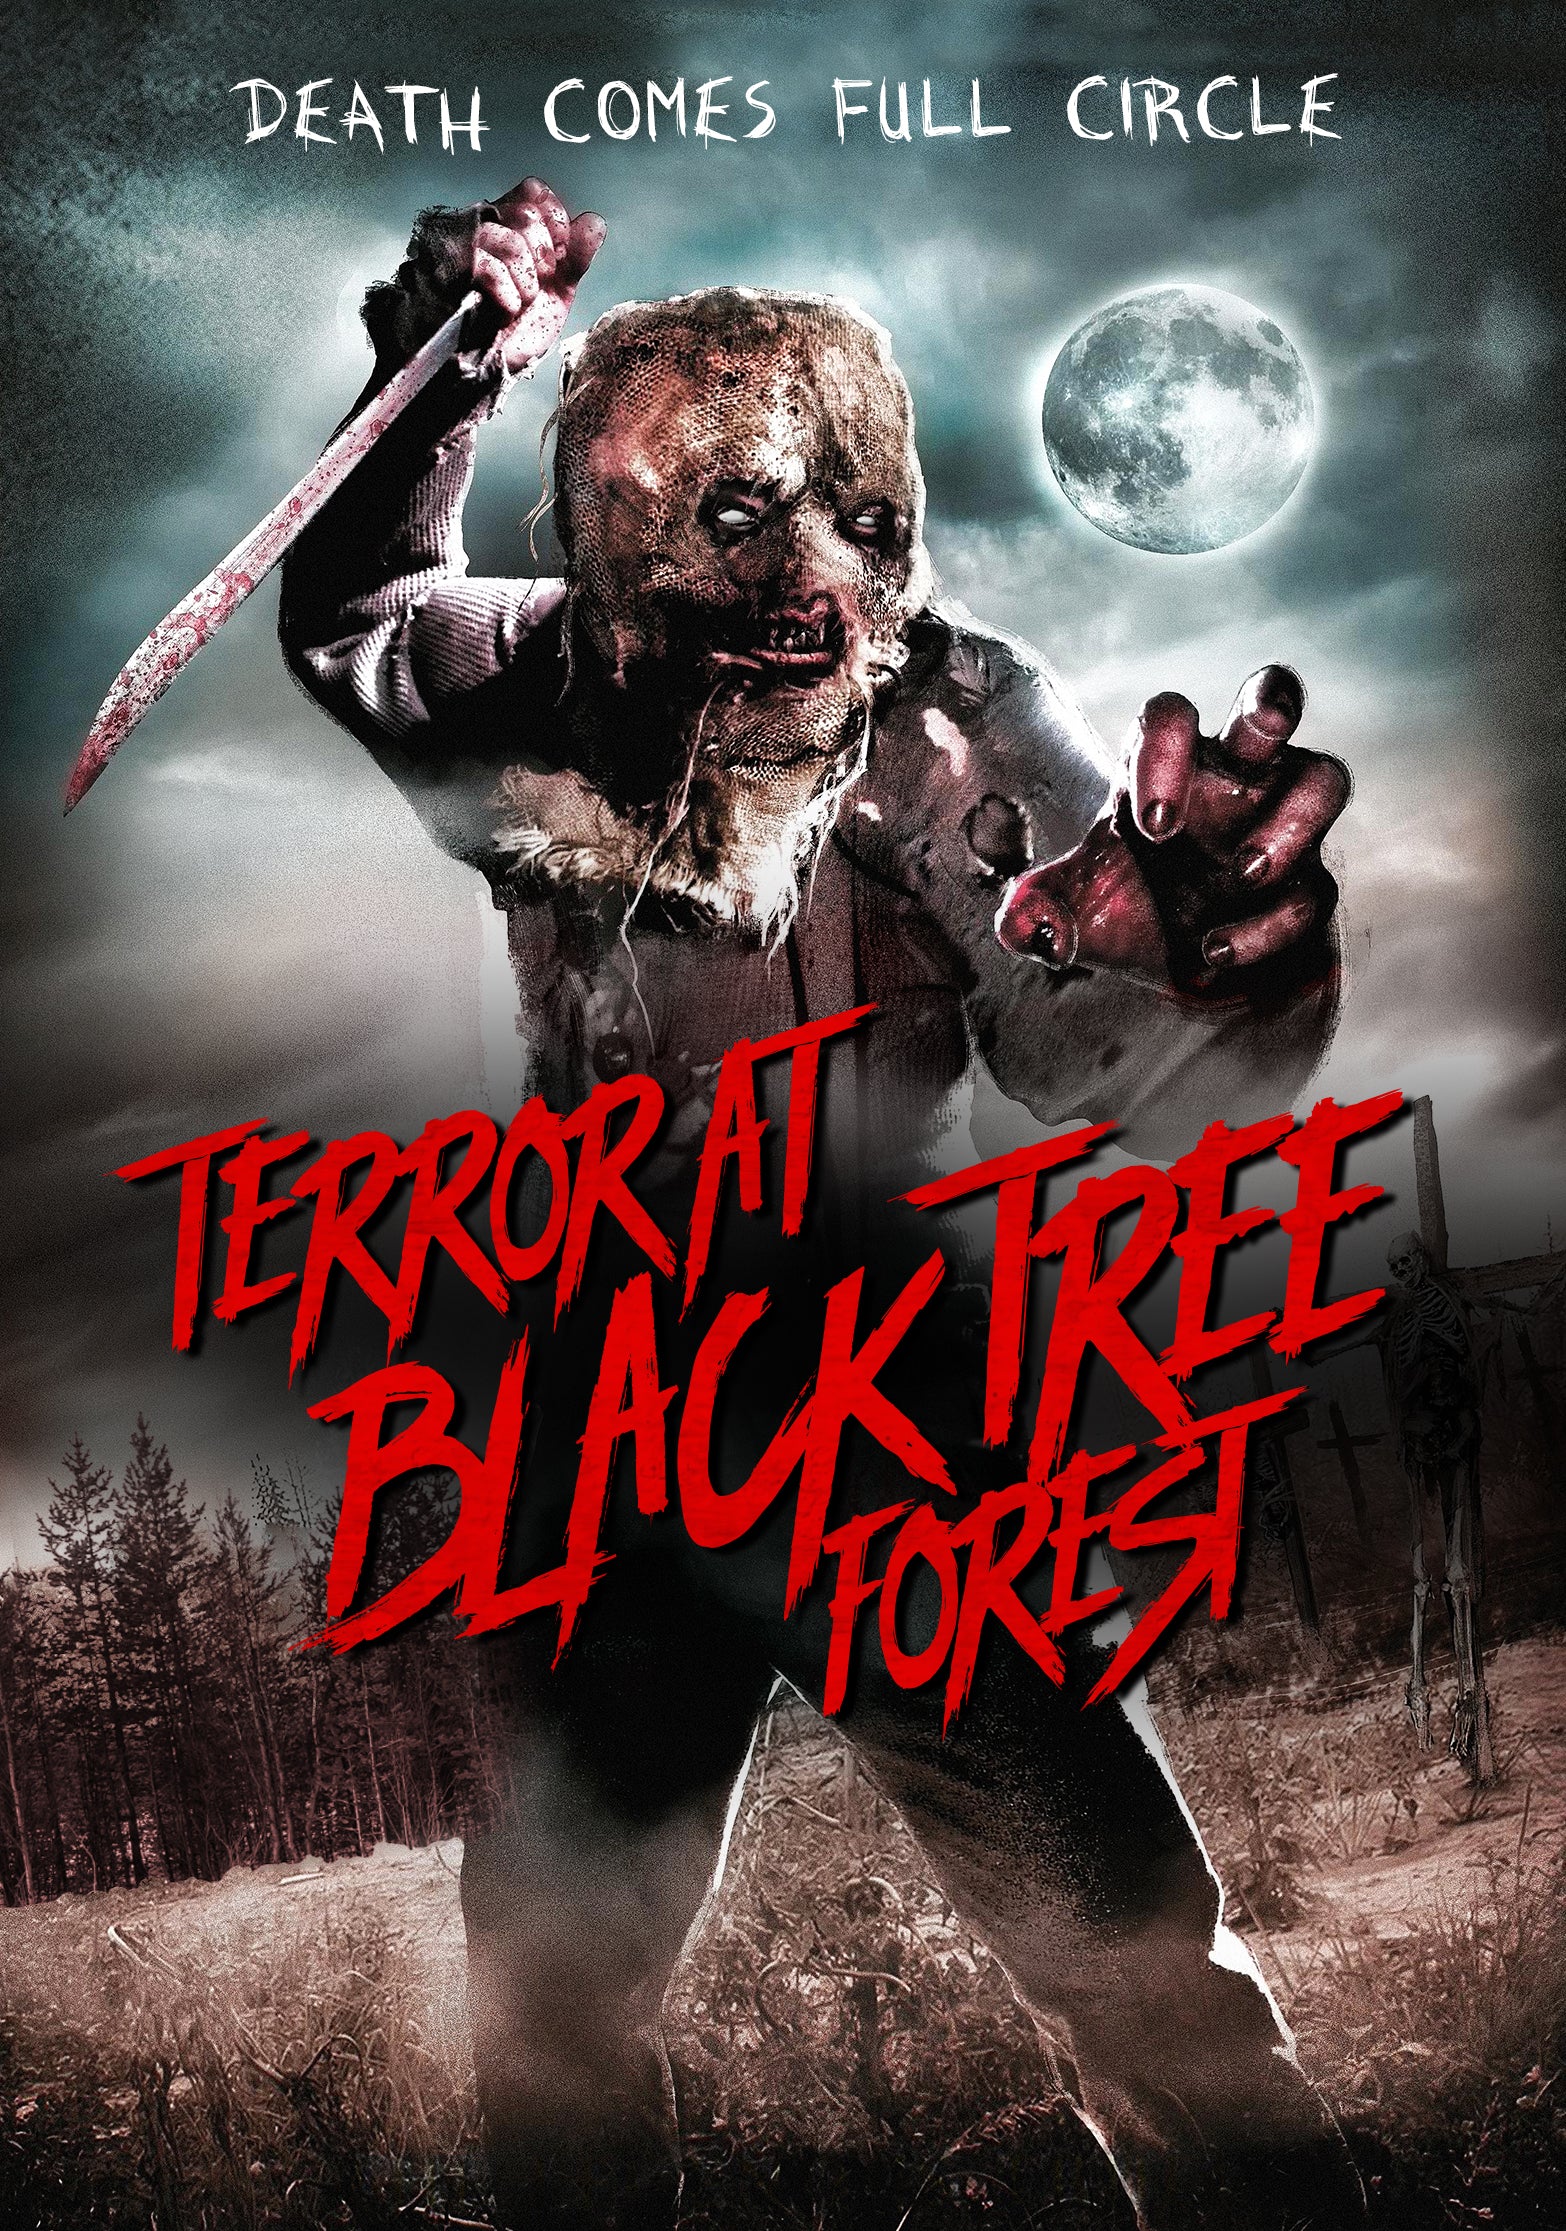 TERROR AT BLACK TREE FOREST DVD